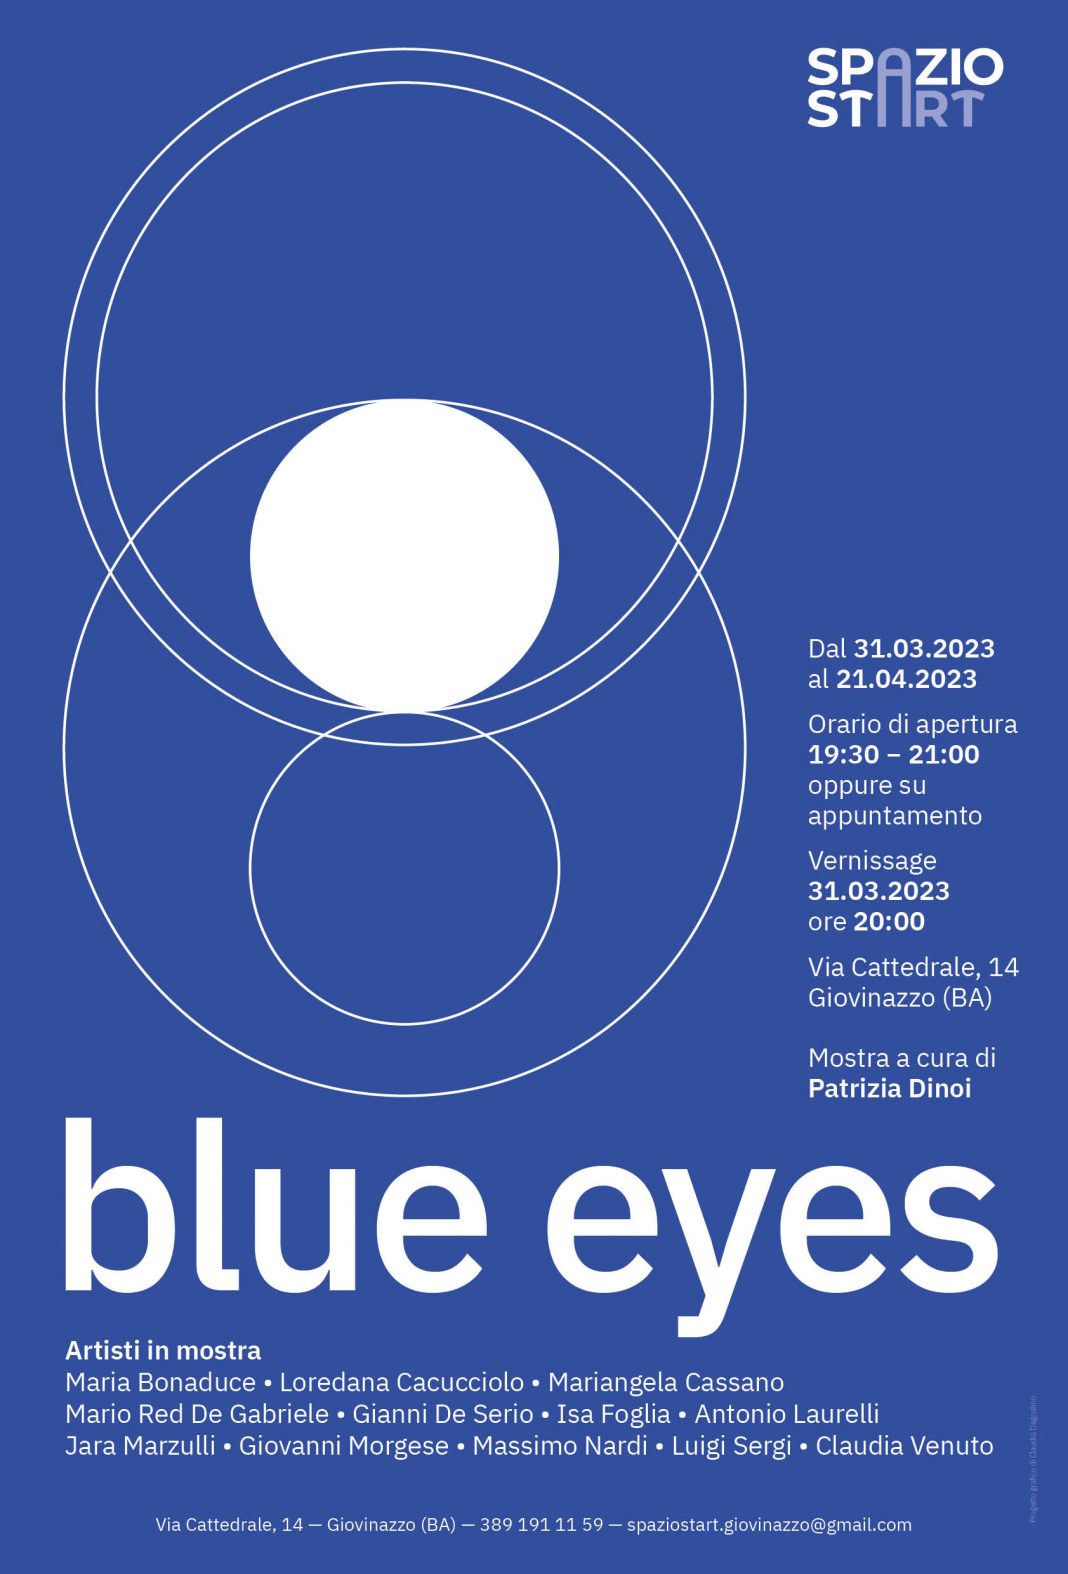 Blue eyeshttps://www.exibart.com/repository/media/formidable/11/img/ec0/blue-eyes-locandina-1068x1574.jpg